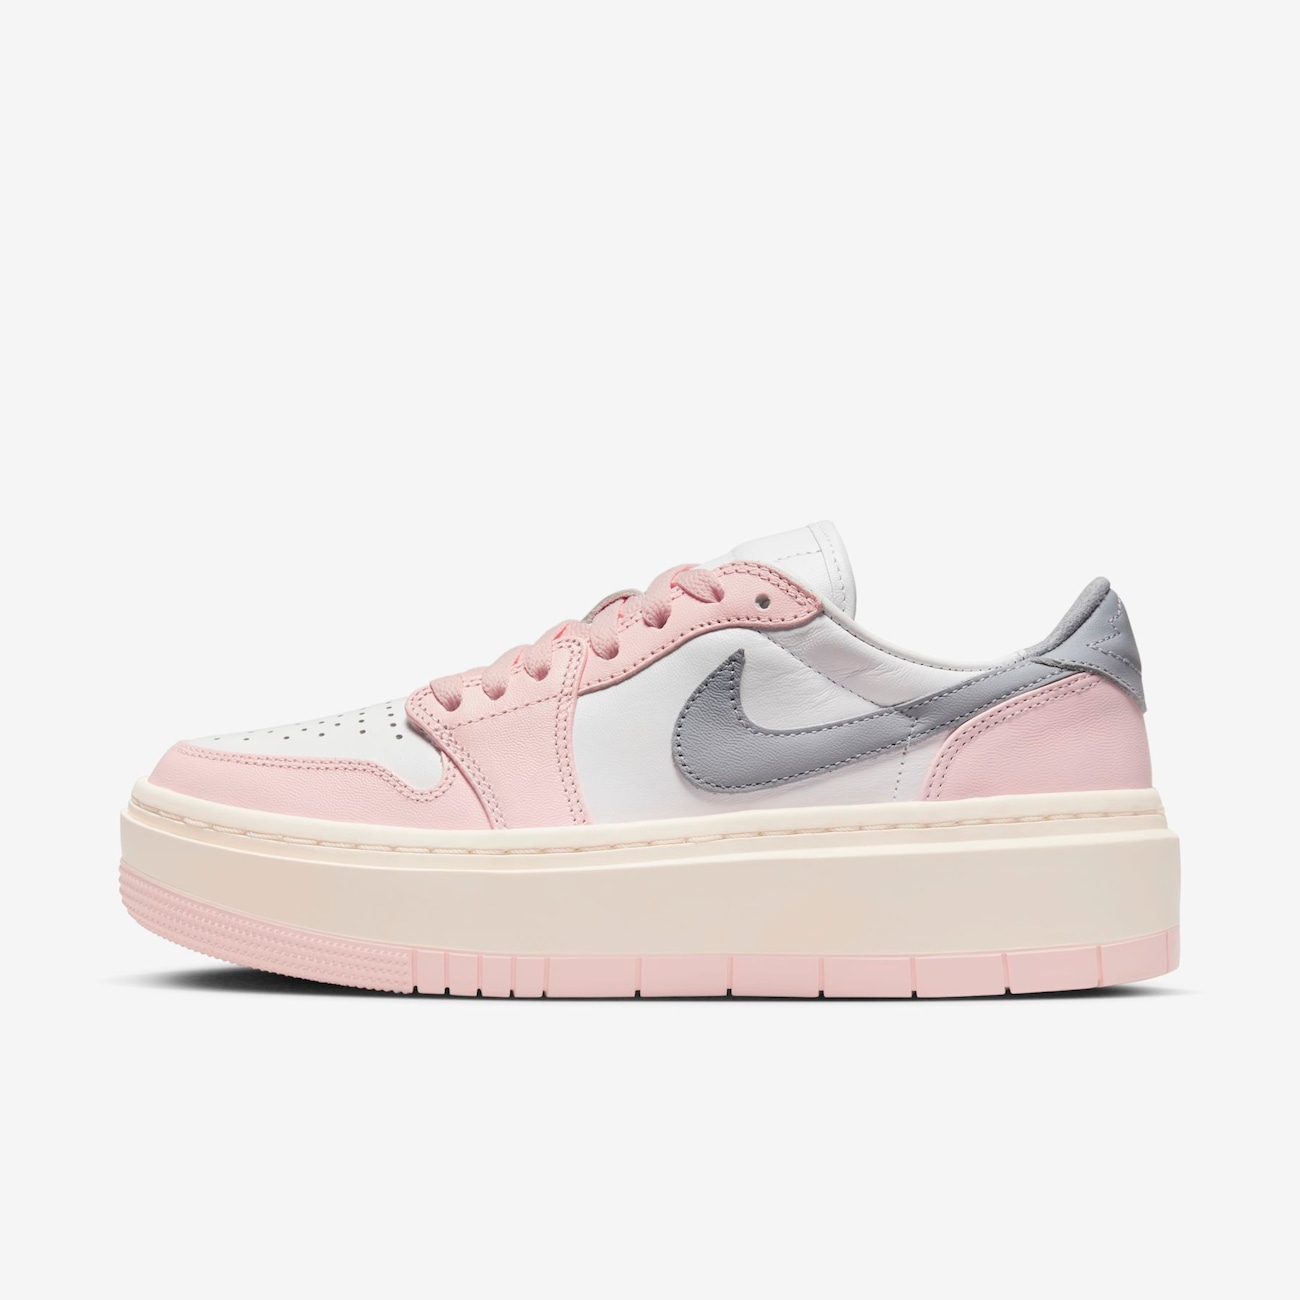 Air Jordan 1 Elevate Low-sko til kvinder - Pink